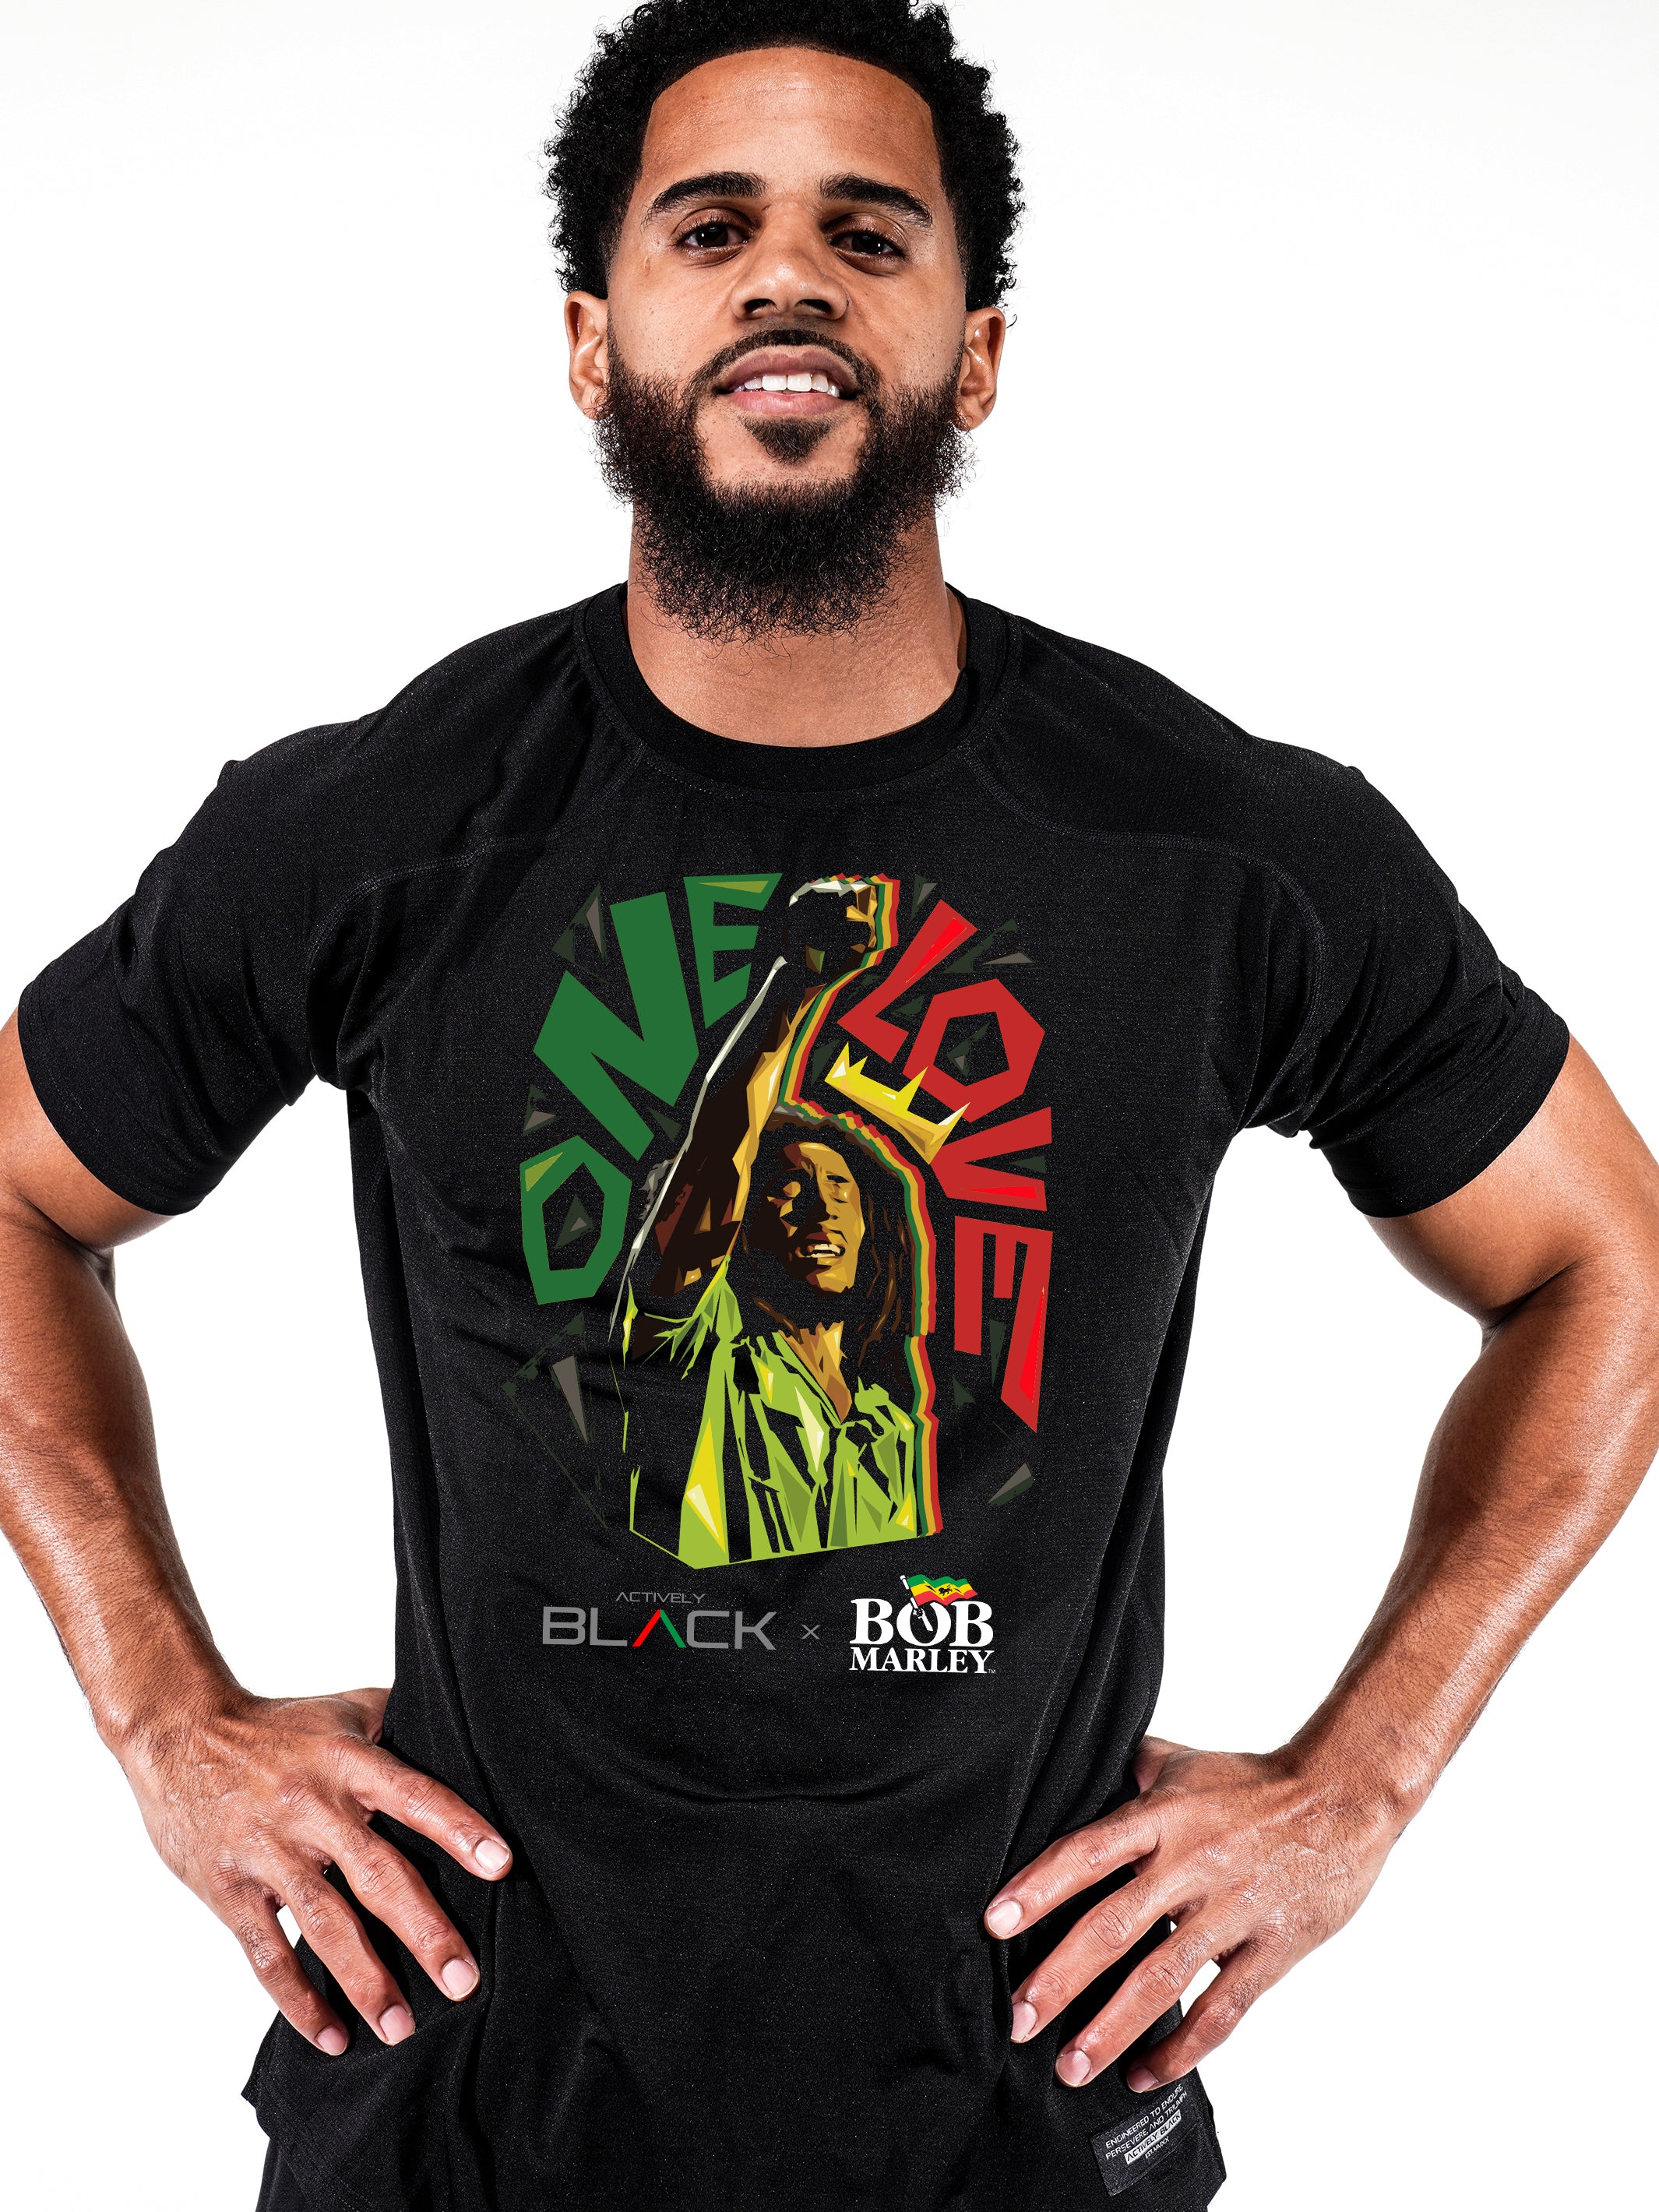 Bob Marley x Actively Black Performance Shirt